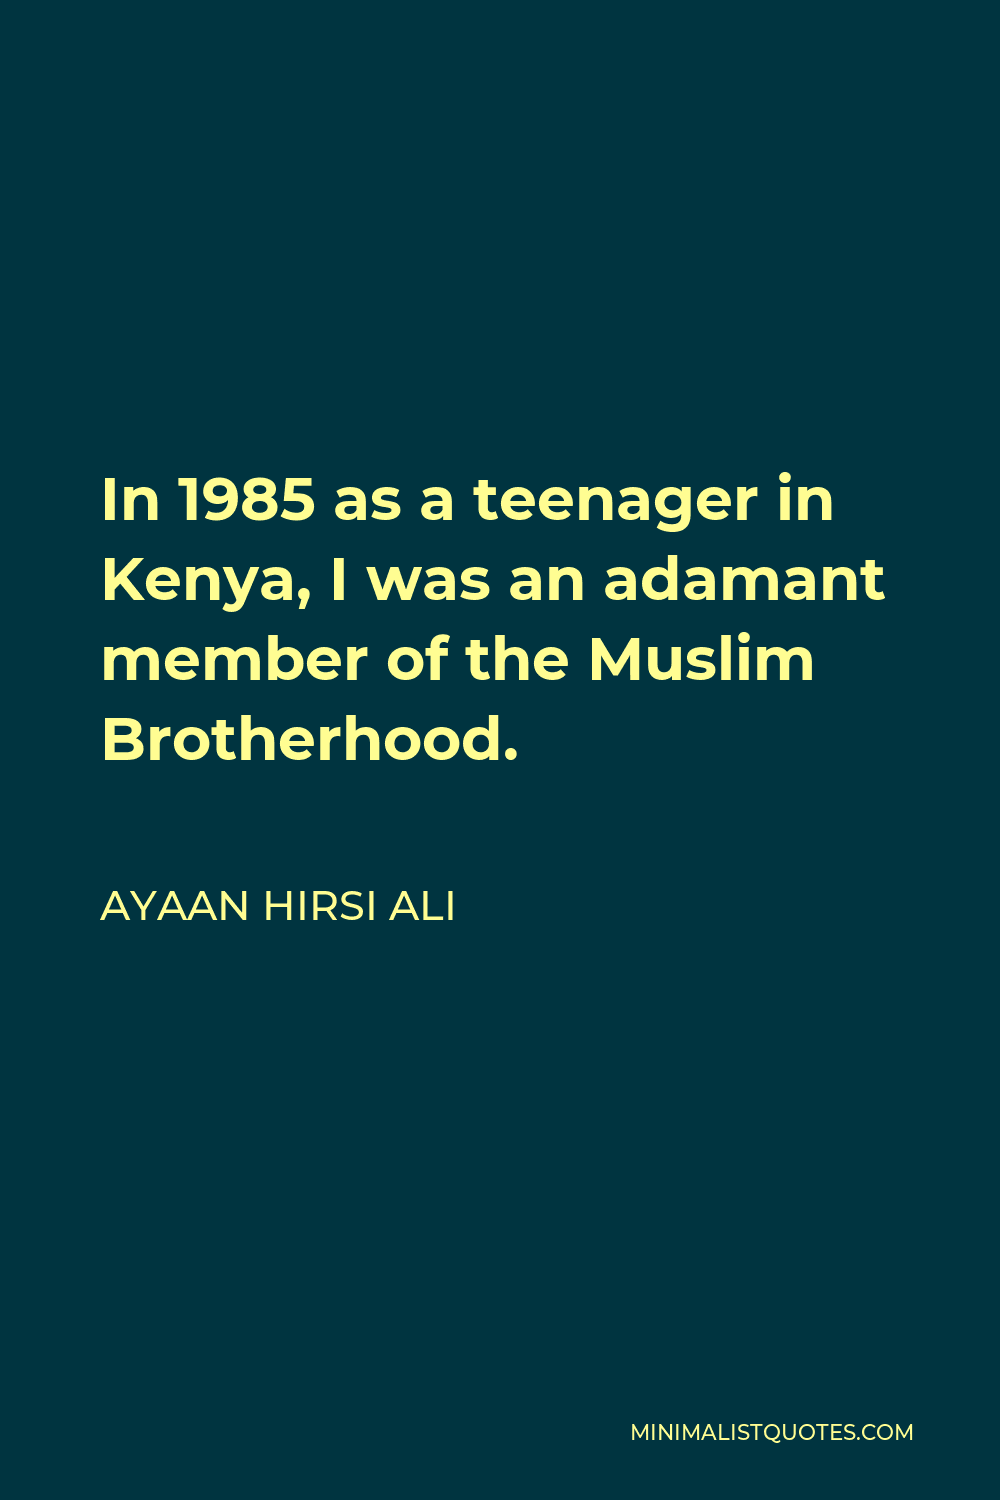 Ayaan Hirsi Ali Quote - In 1985 as a teenager in Kenya, I was an adamant member of the Muslim Brotherhood.